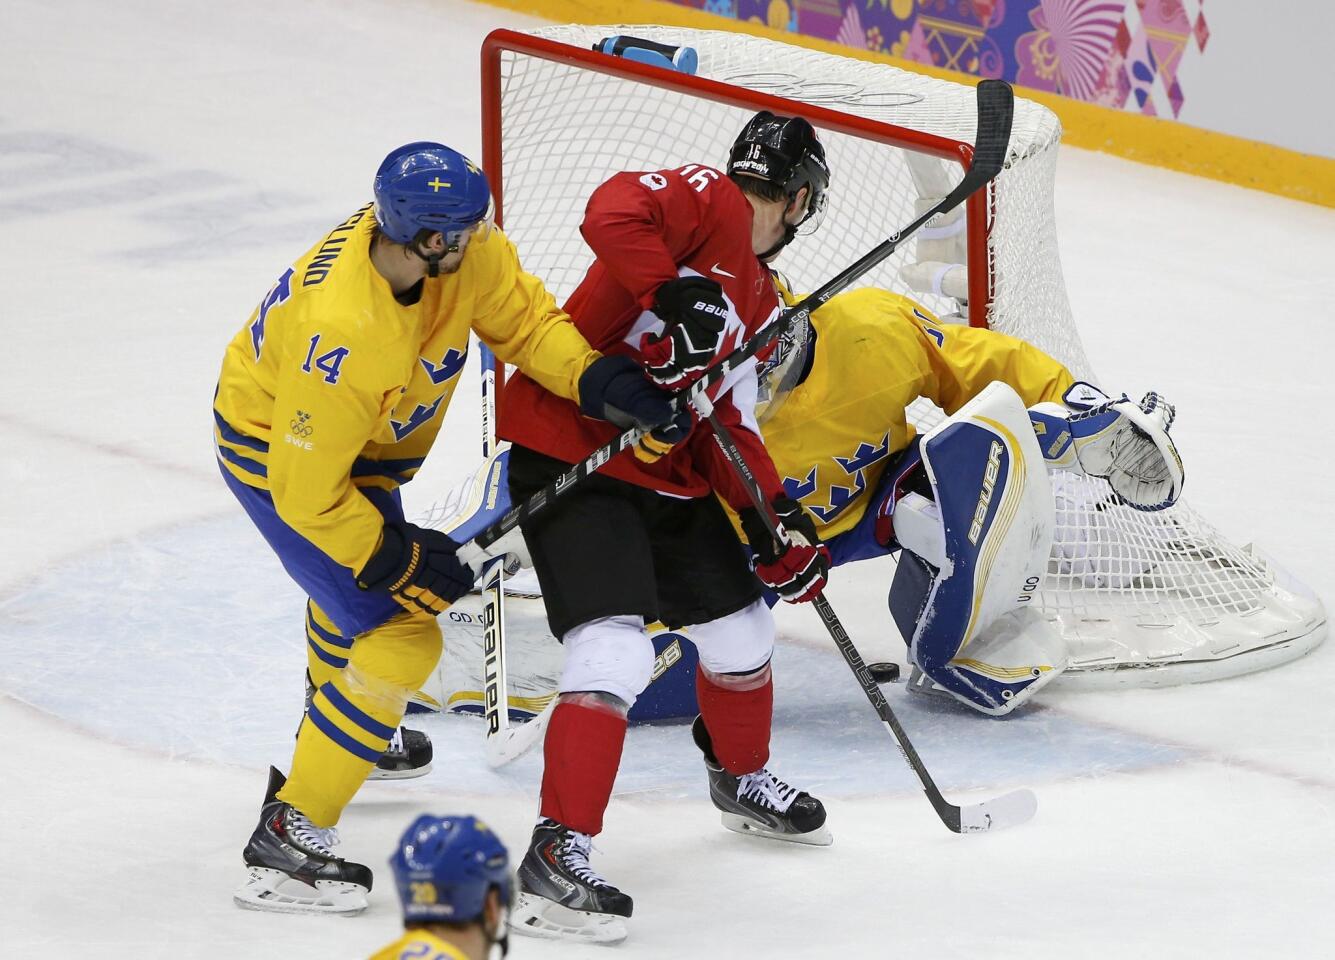 Canada's Jonathan Toews scores on Sweden's goalie Henrik Lundqvist as Sweden's Patrik Berglund defends.